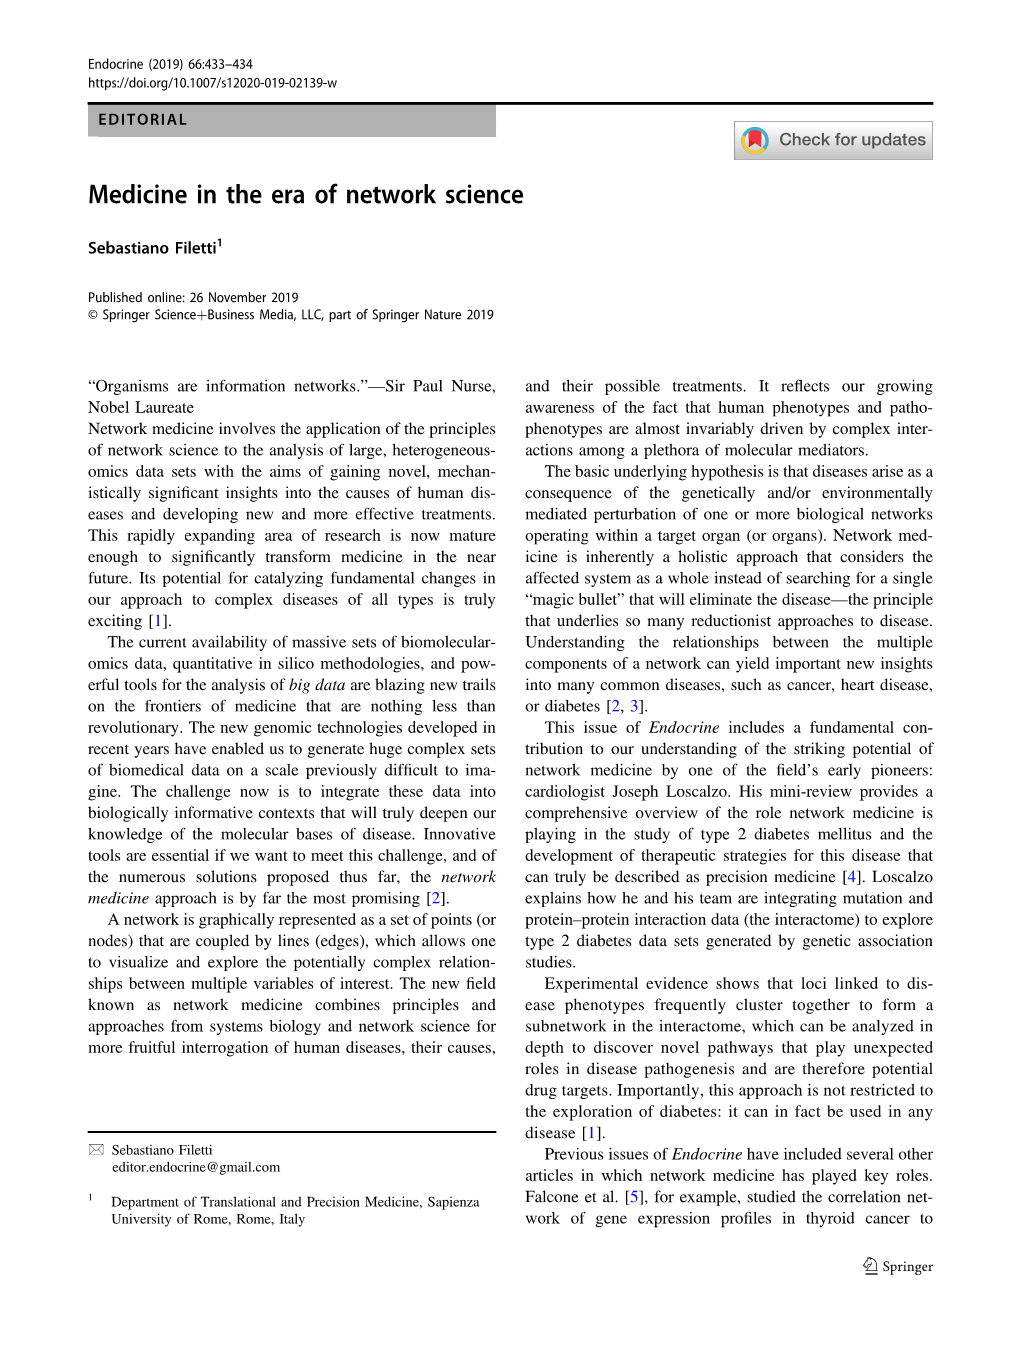 Medicine in the Era of Network Science